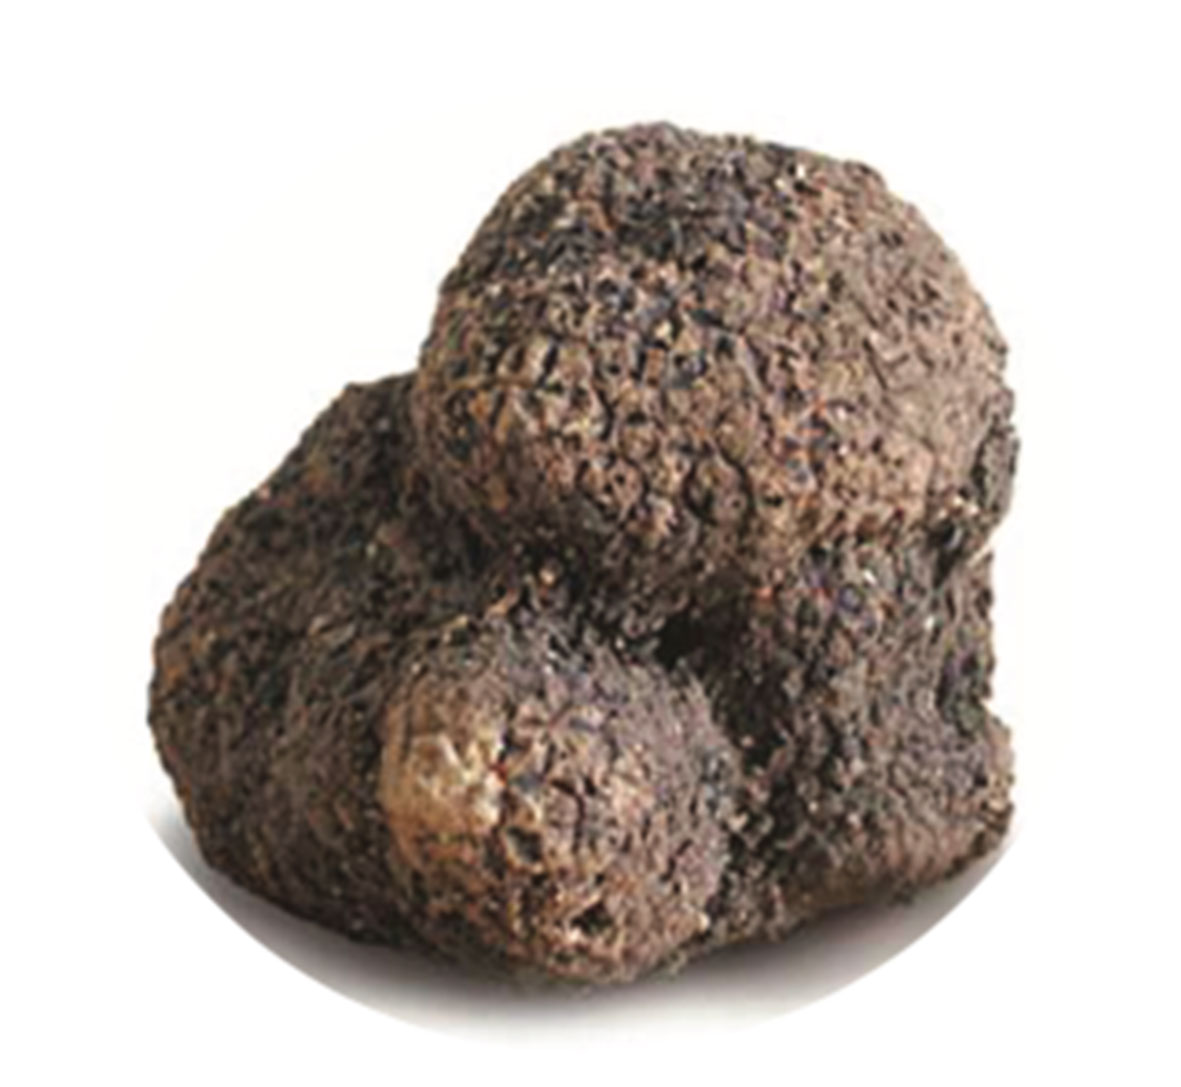 Fresh precious black truffle